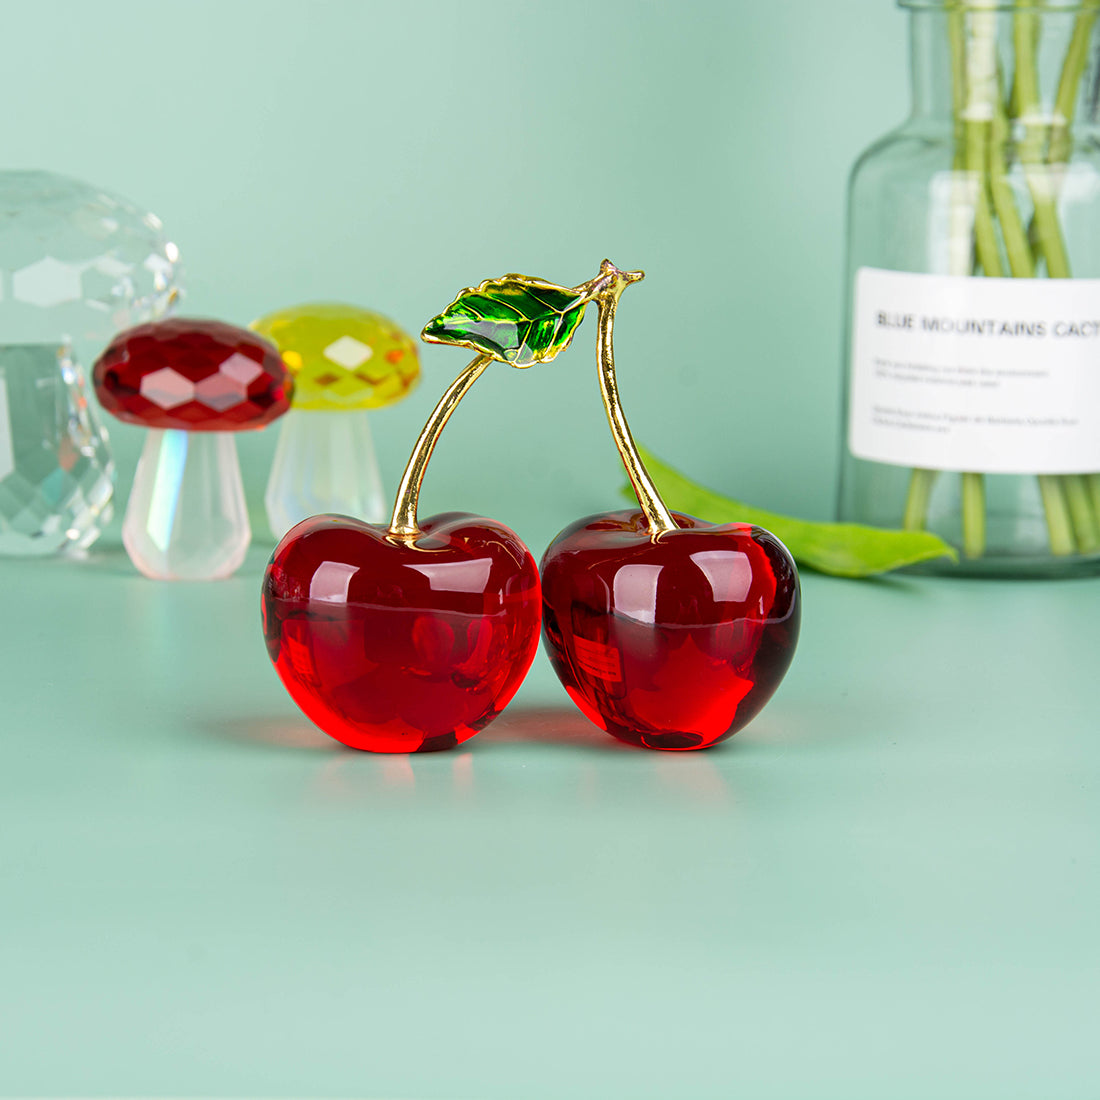 Crystal Ornaments Simulation Decorative Fruit Cherries